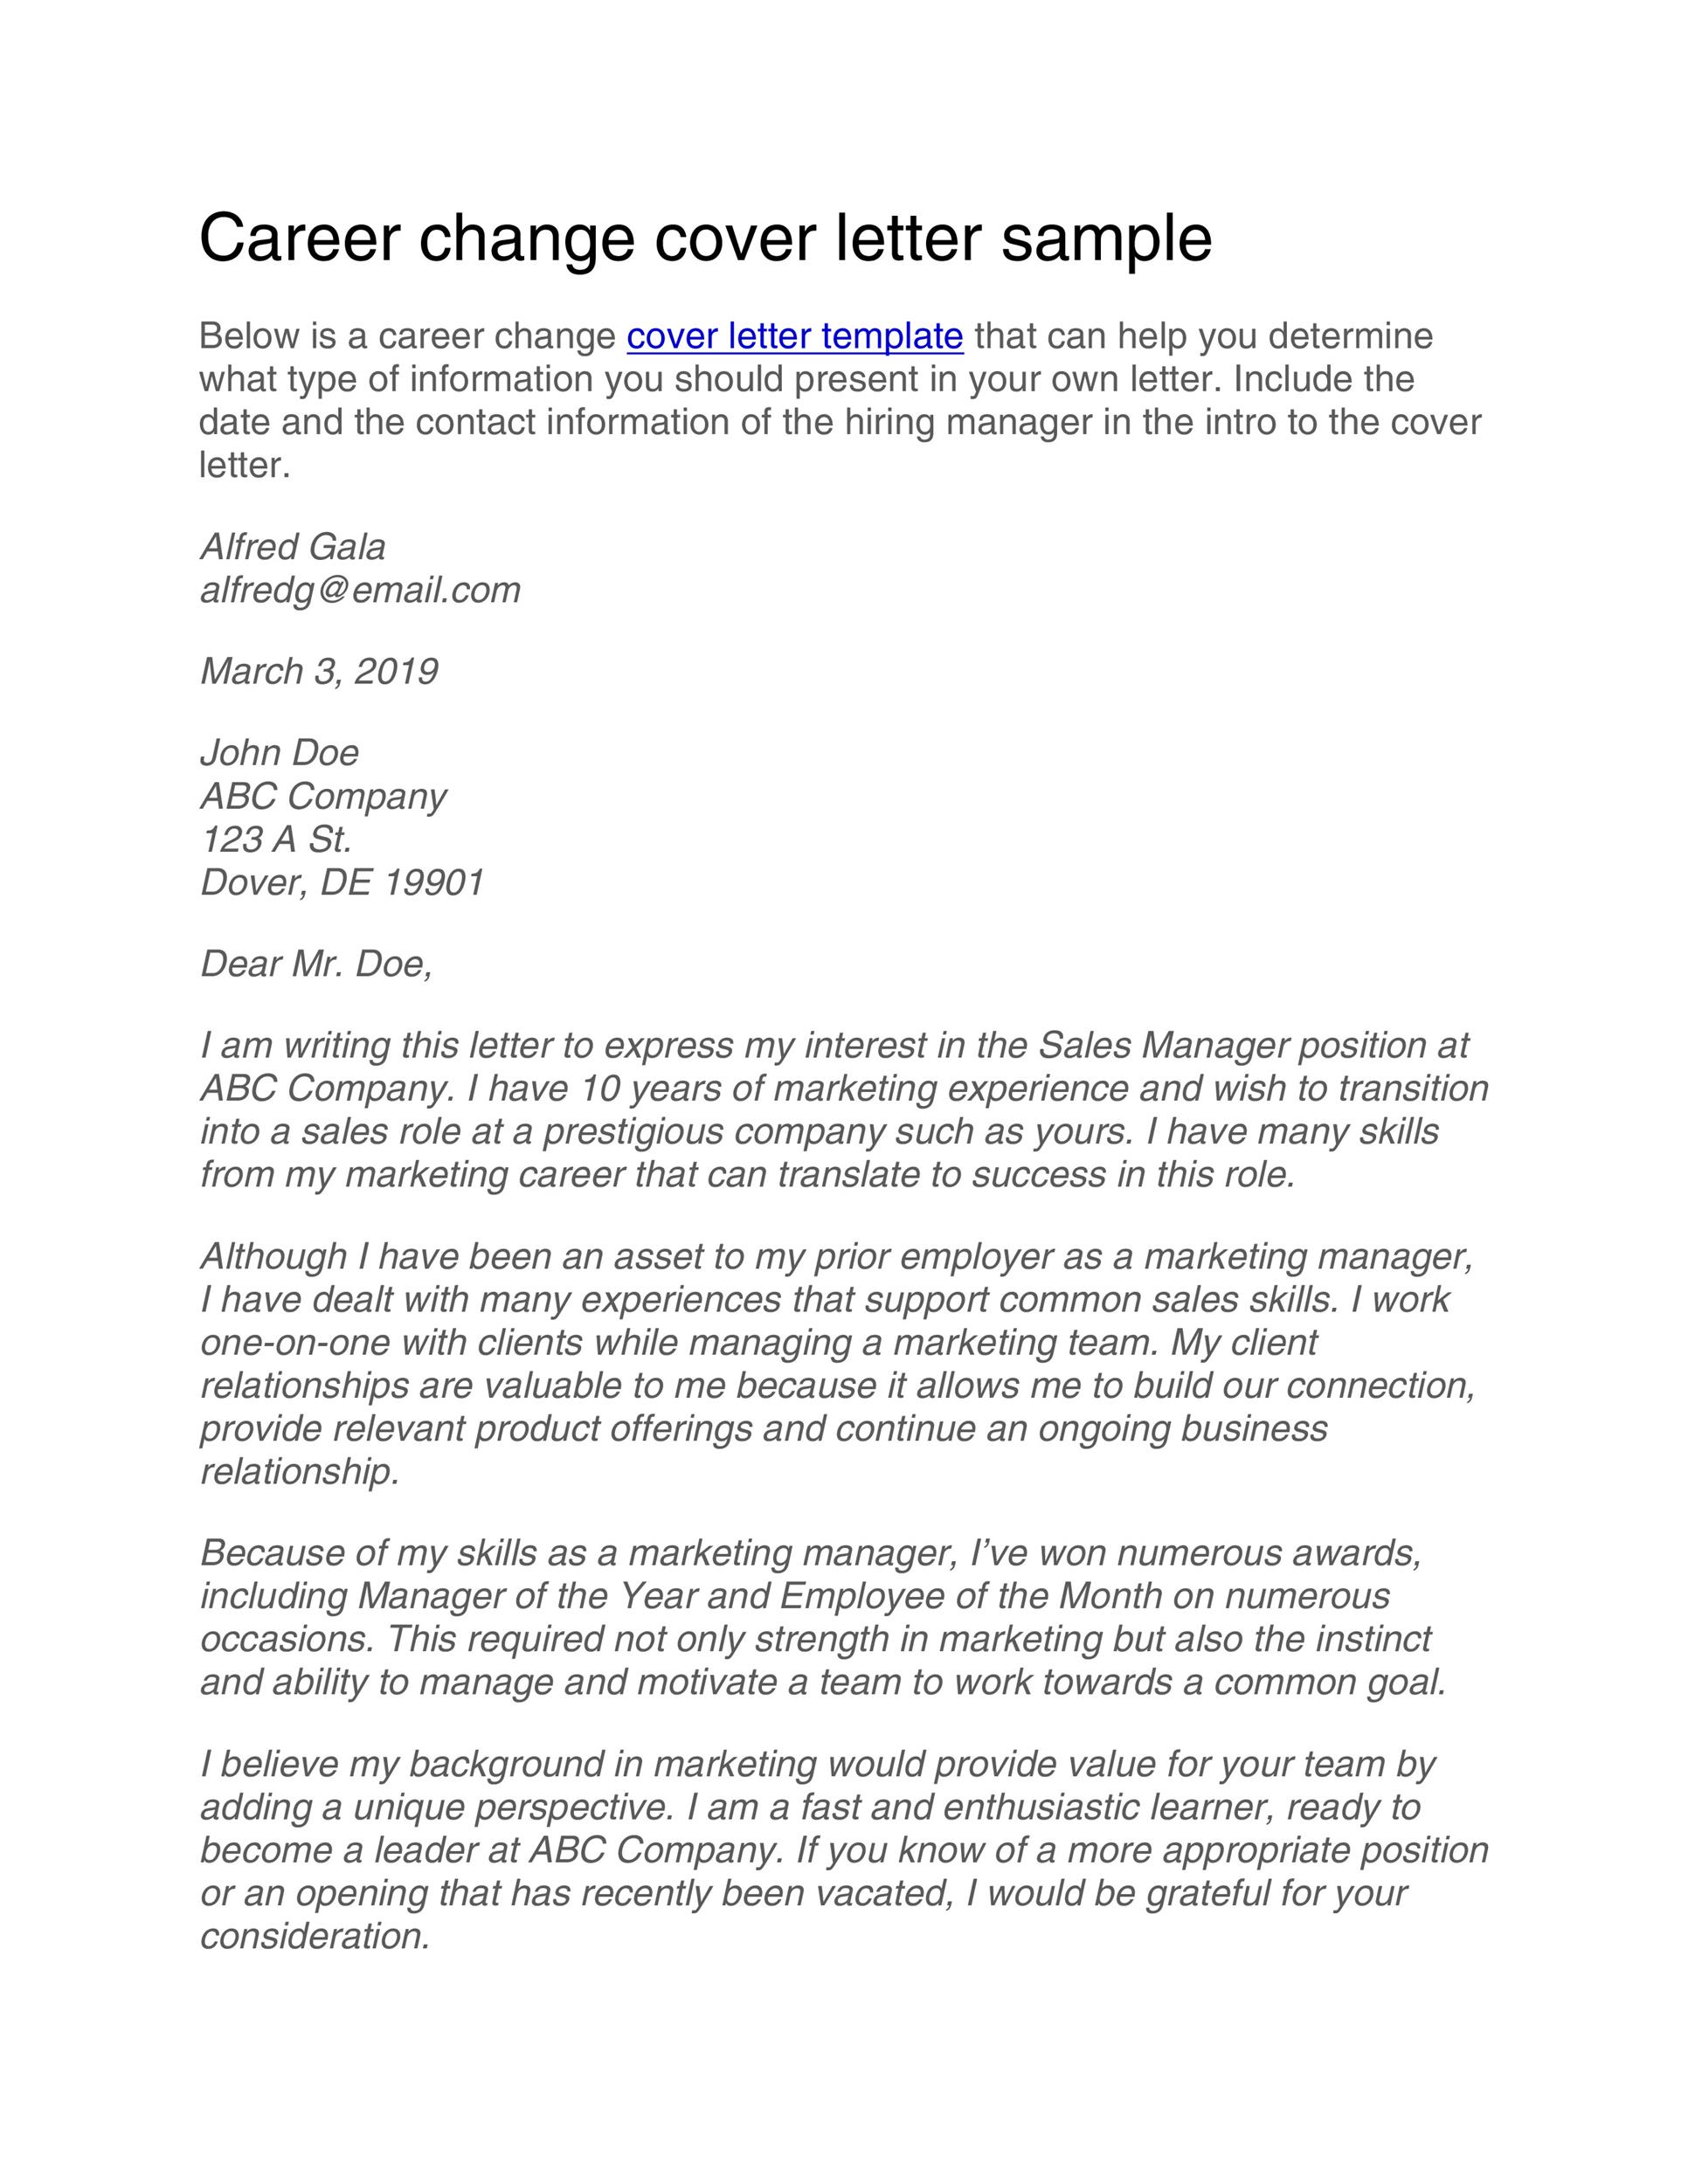 Career Change Cover Letter Template - Sample Cover Letter